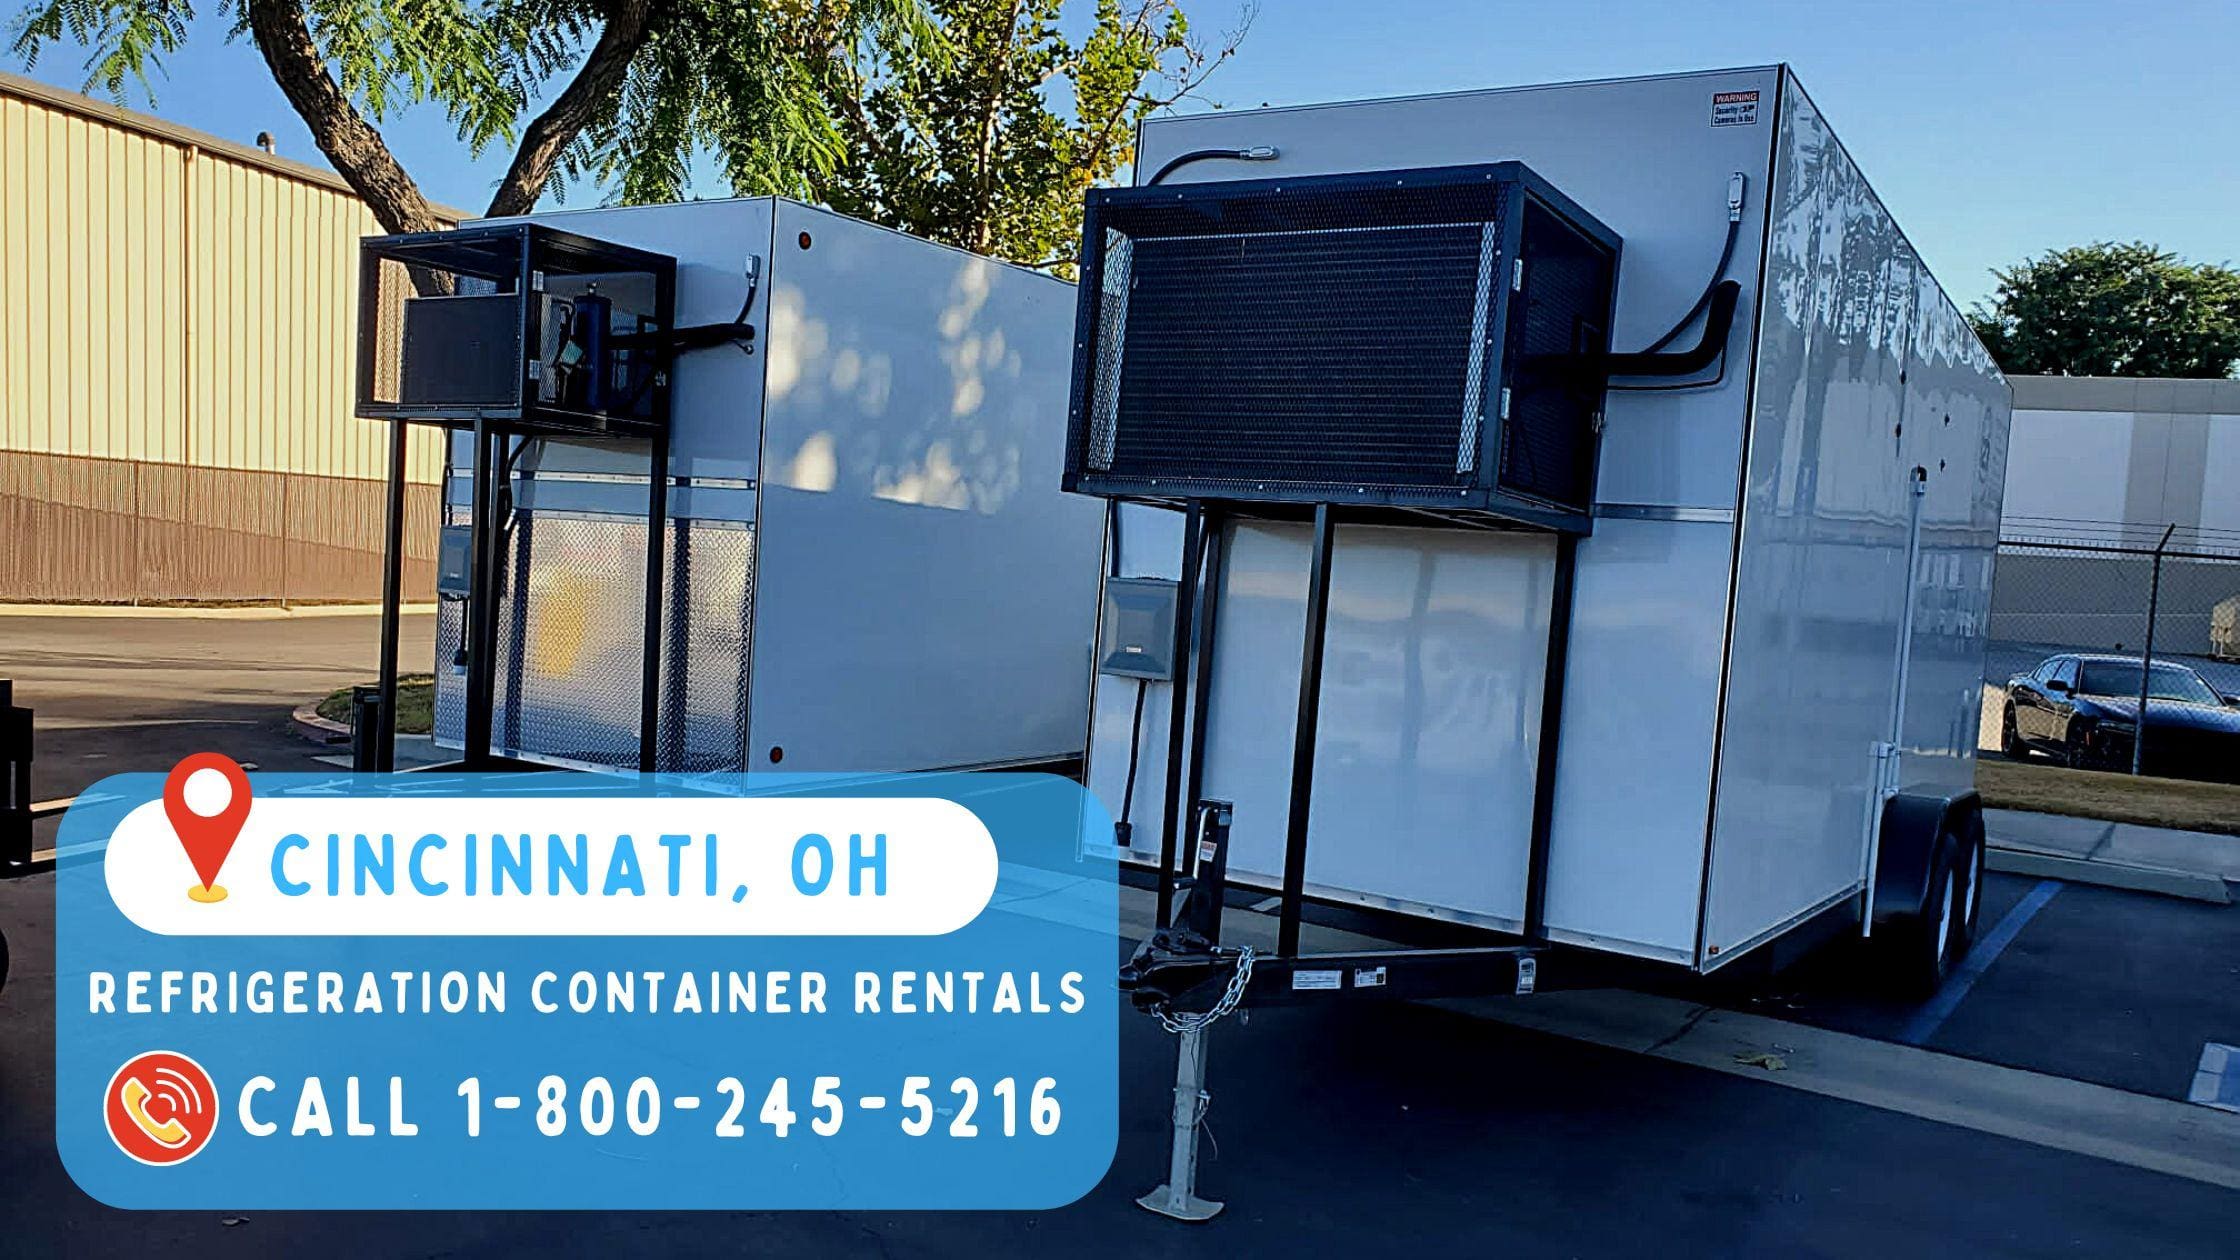 Refrigeration Container Rentals in Cincinnati, OH